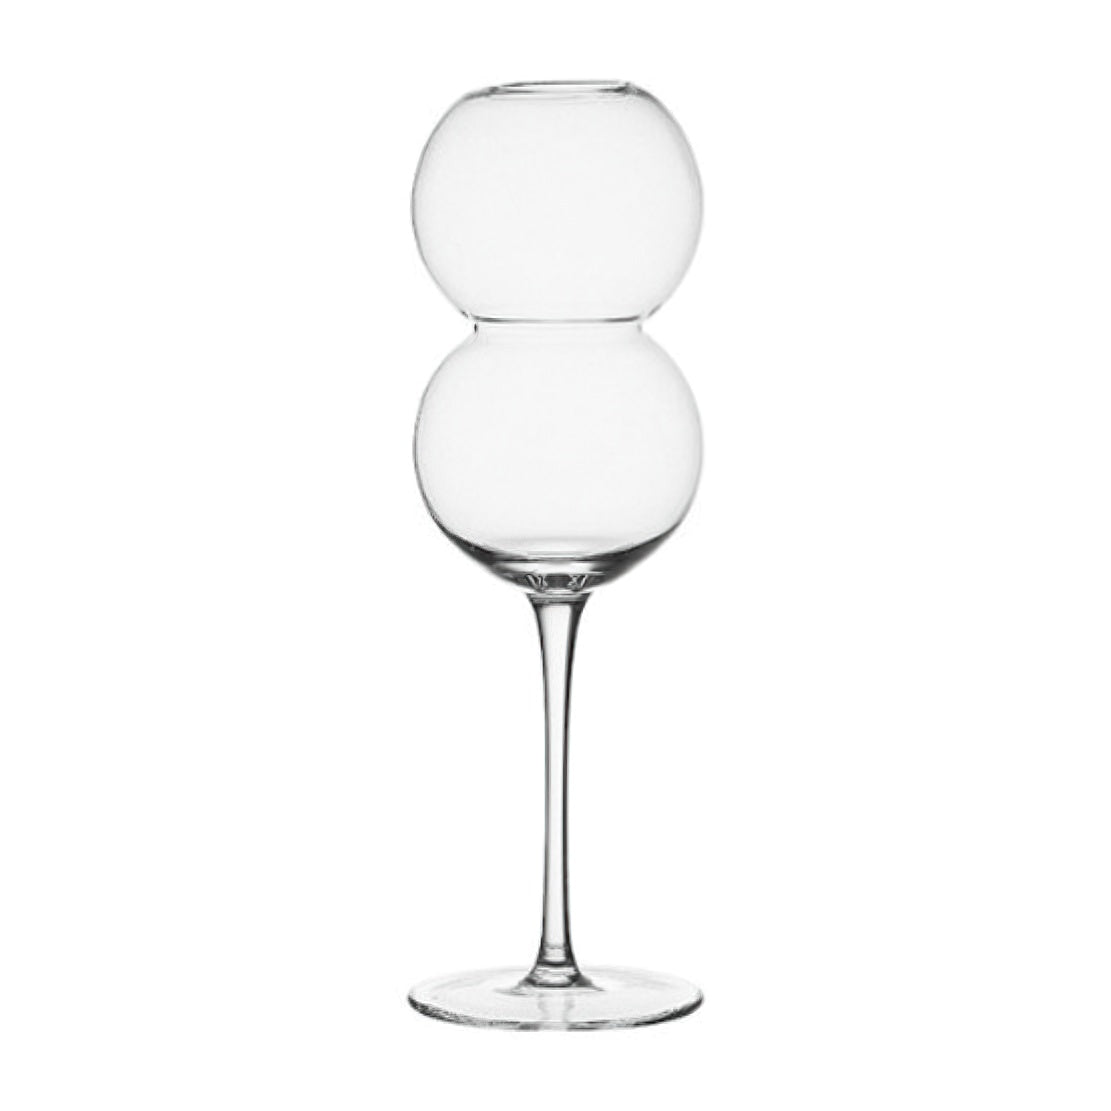 Layered glass ball goblet.